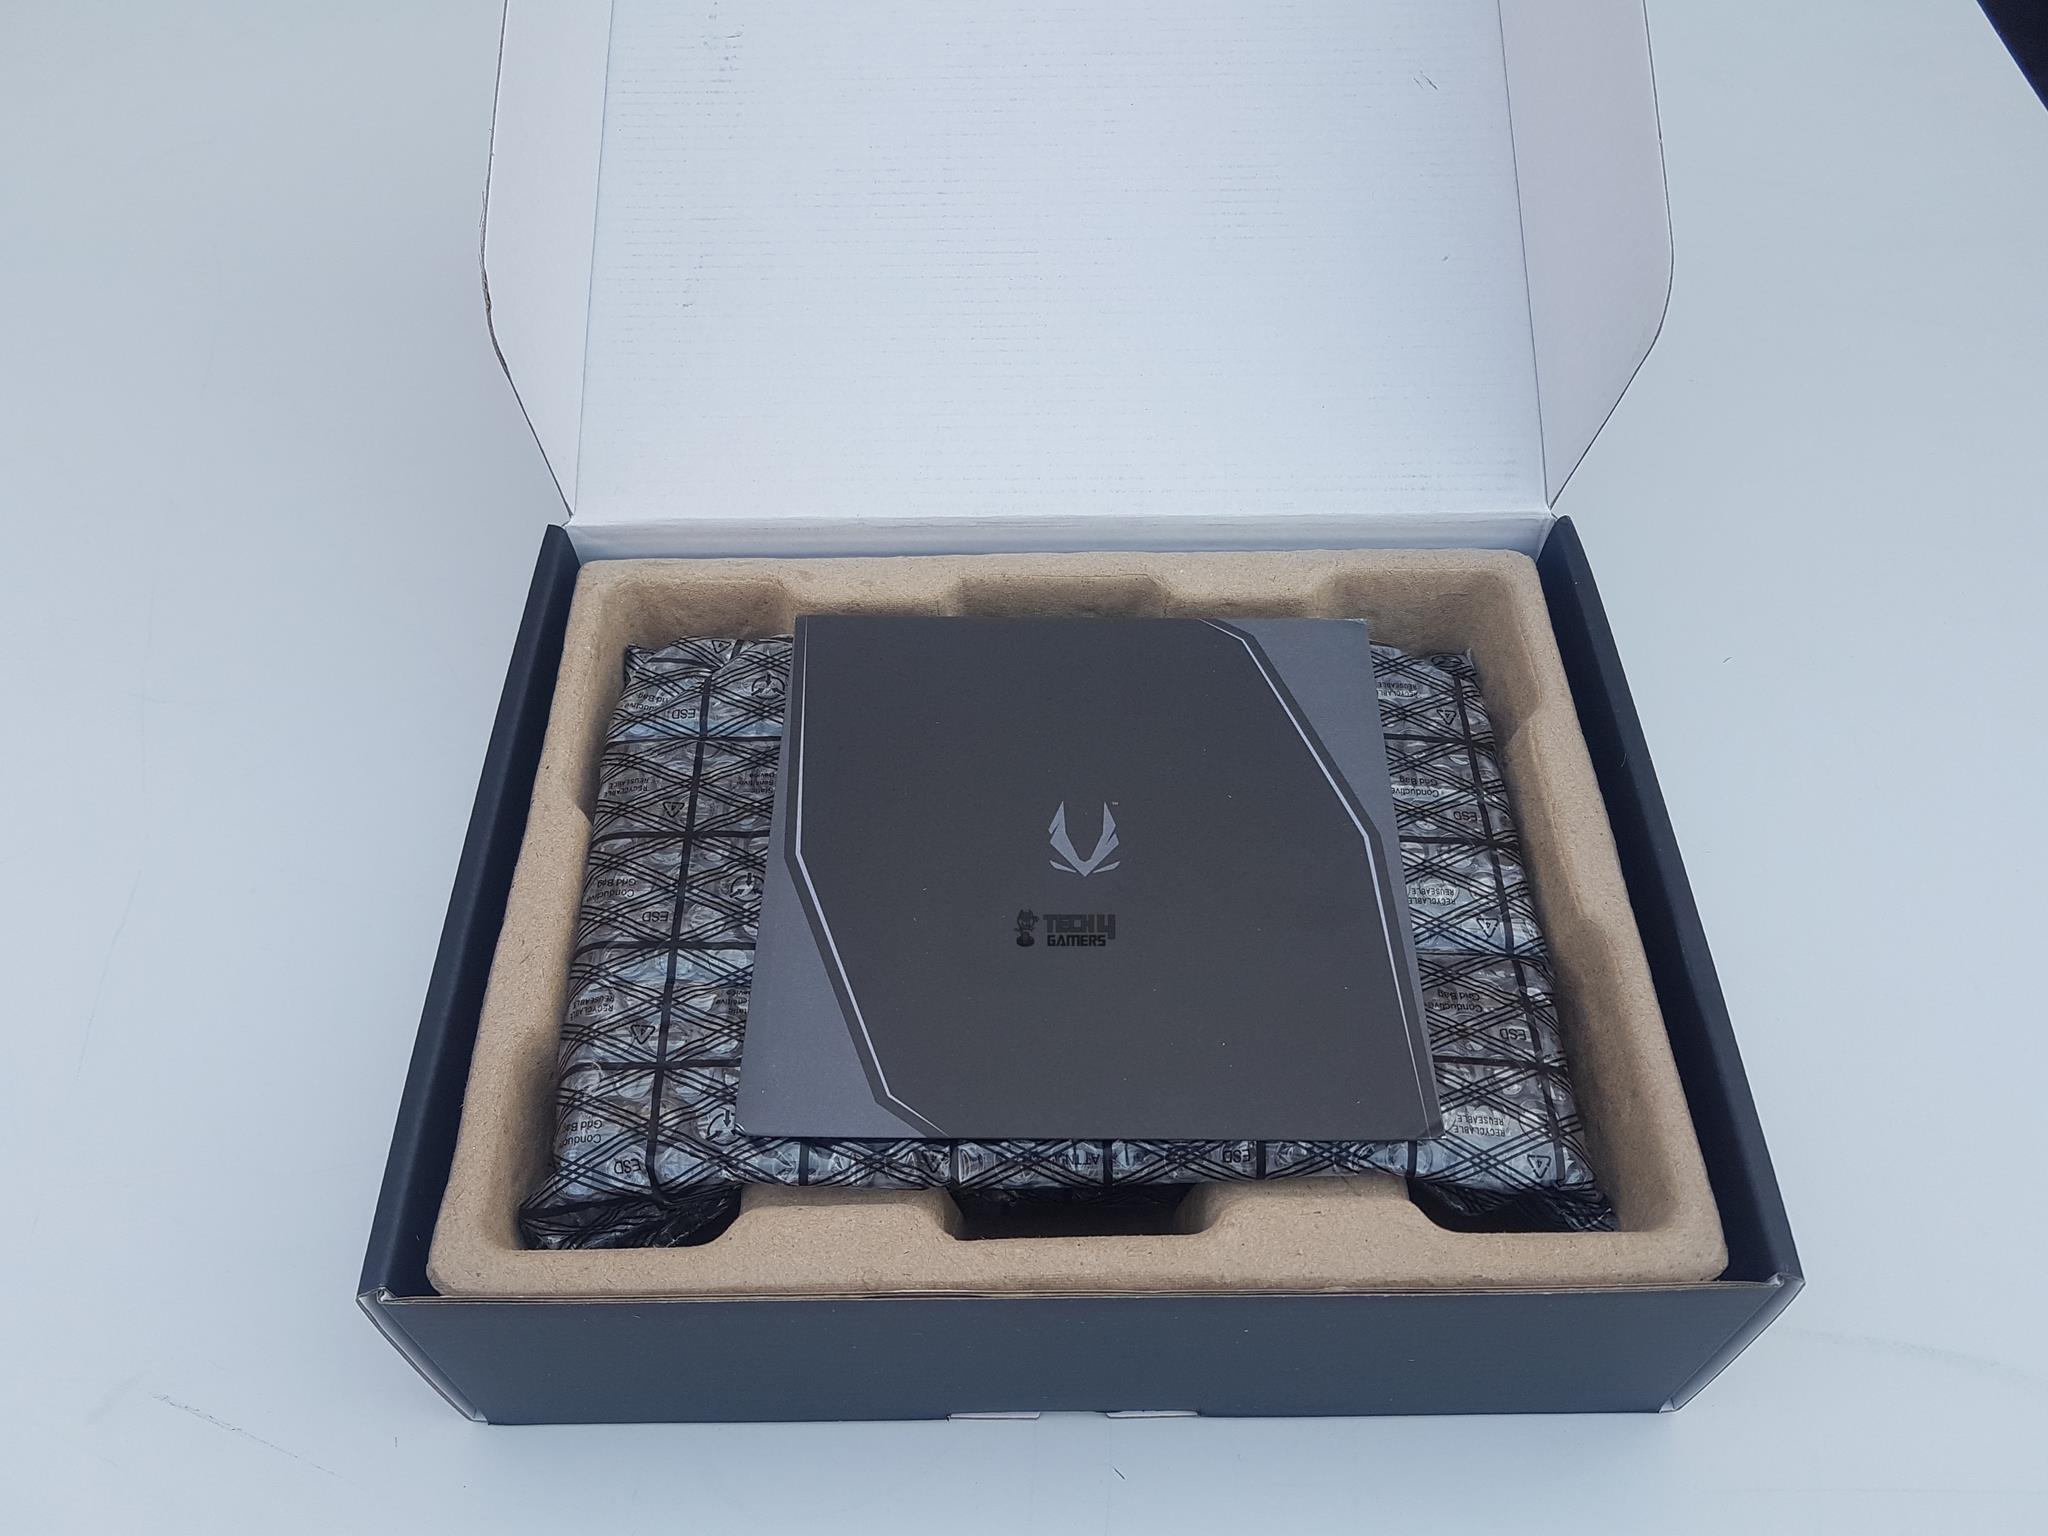 ZOTAC GeForce GTX 1660 Ti Amp Edition — Unboxing the GPU